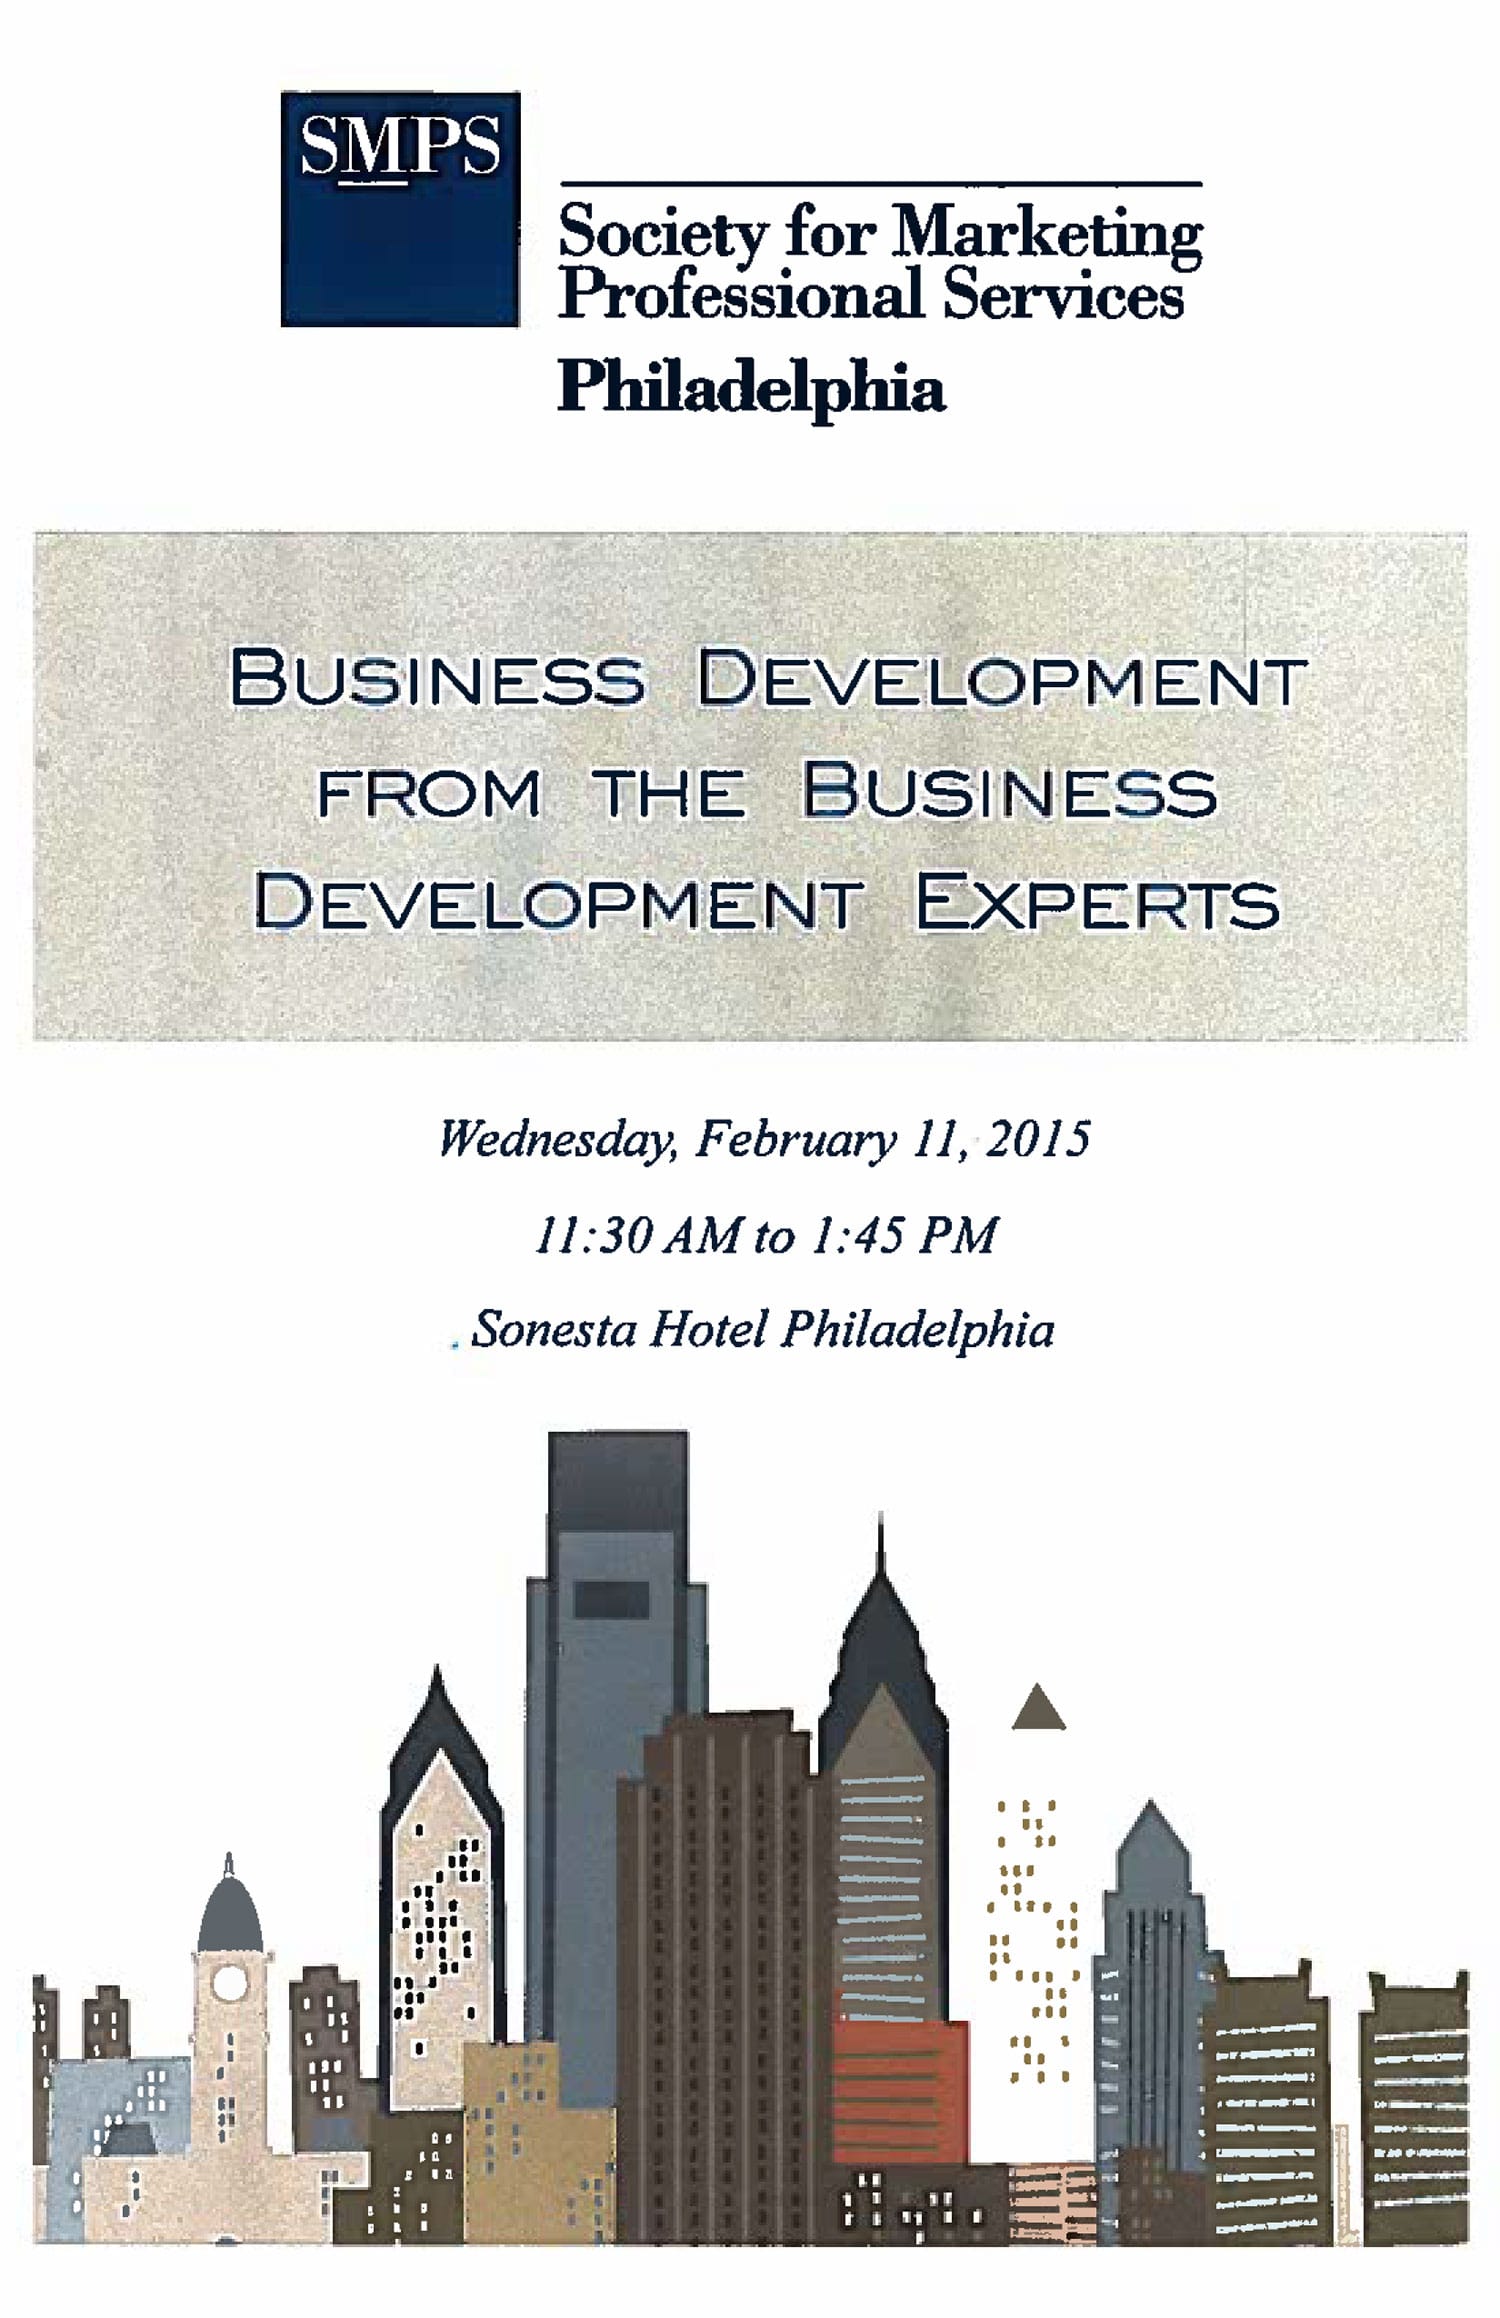 SMPS Business Development